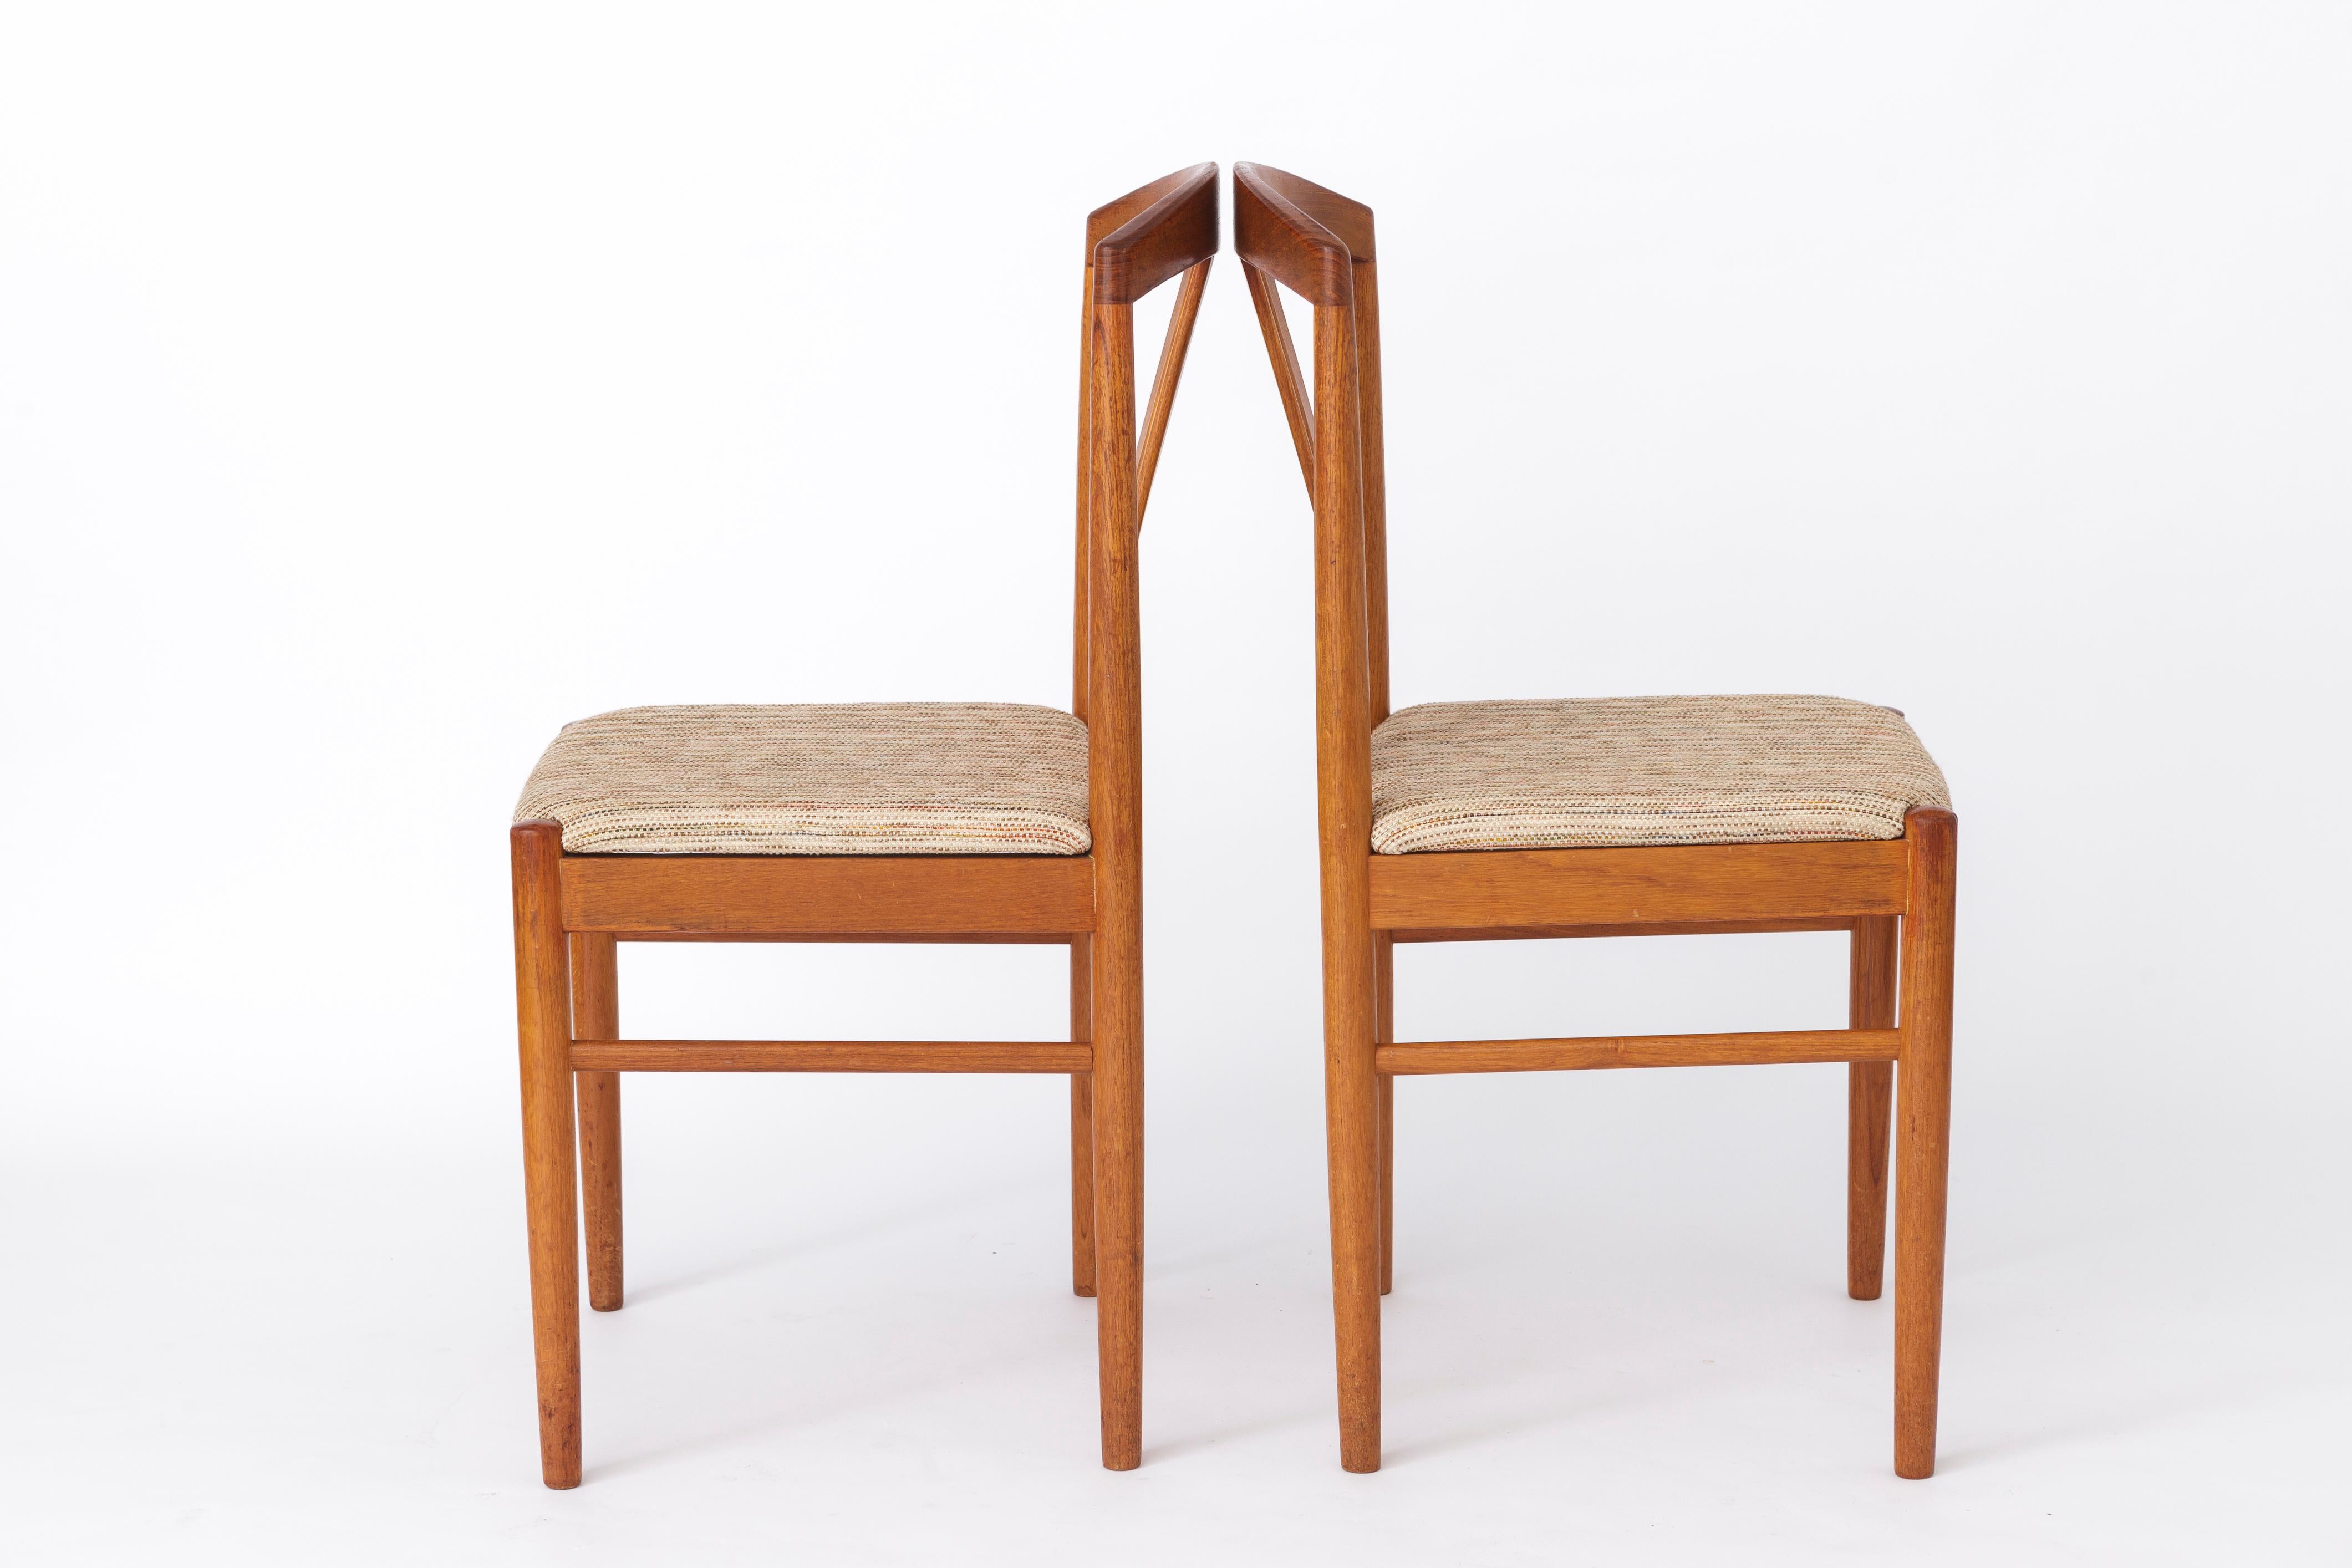 Polished 2 of 4 Chairs by Carl Ekström for Albin Johansson & Söner, Sweden, 1960s - Set o For Sale